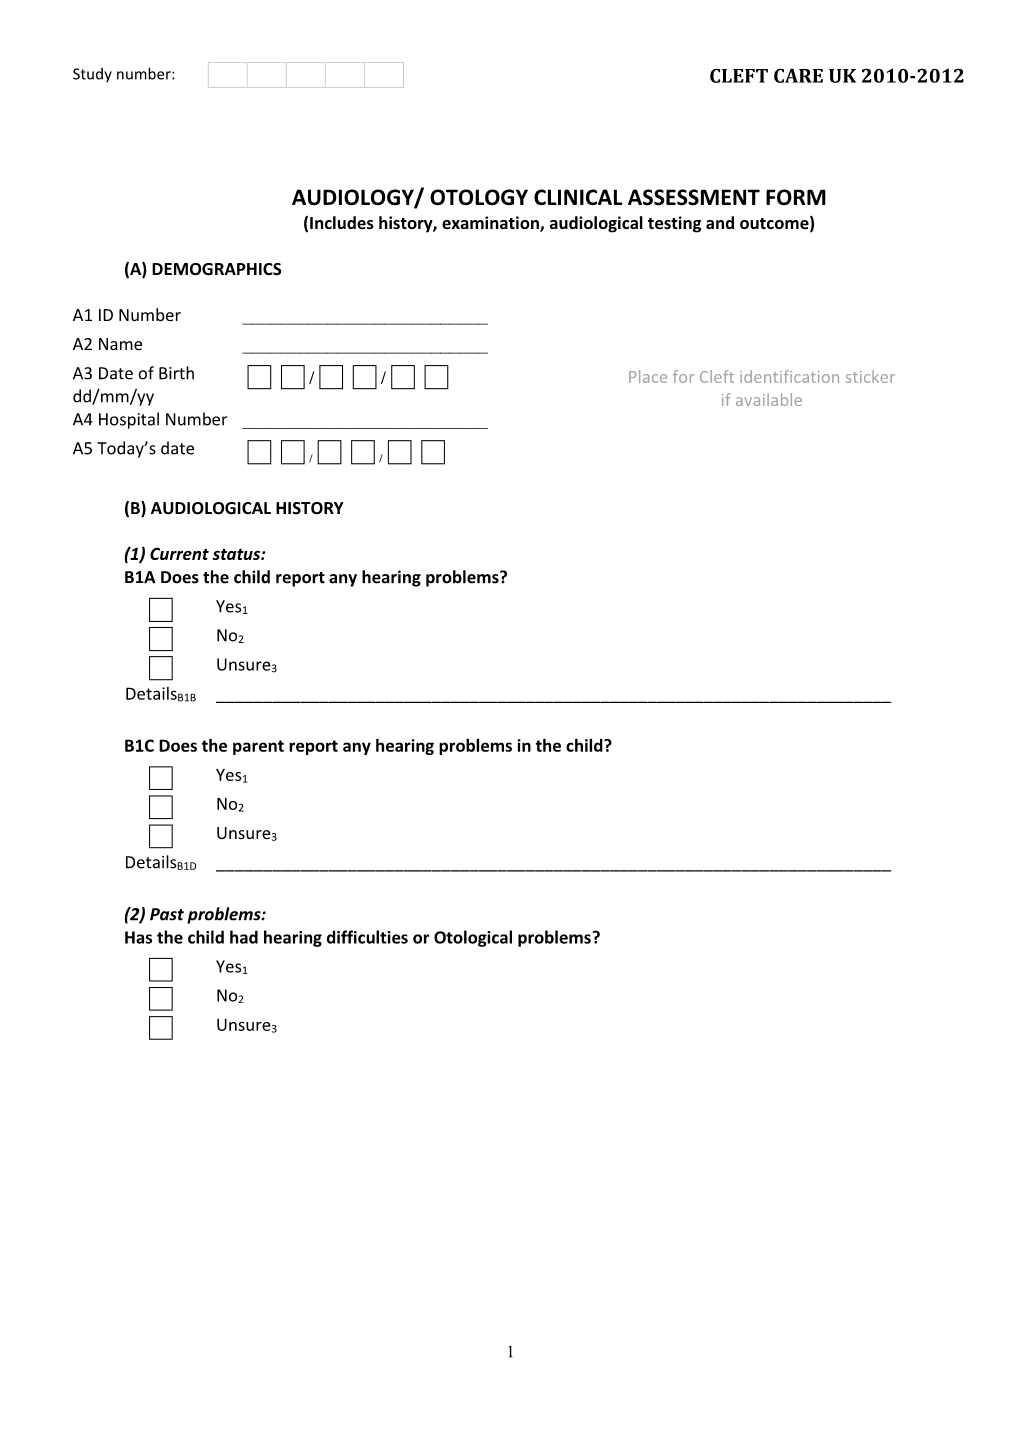 Audiology/Otology Clinical Assessment Form